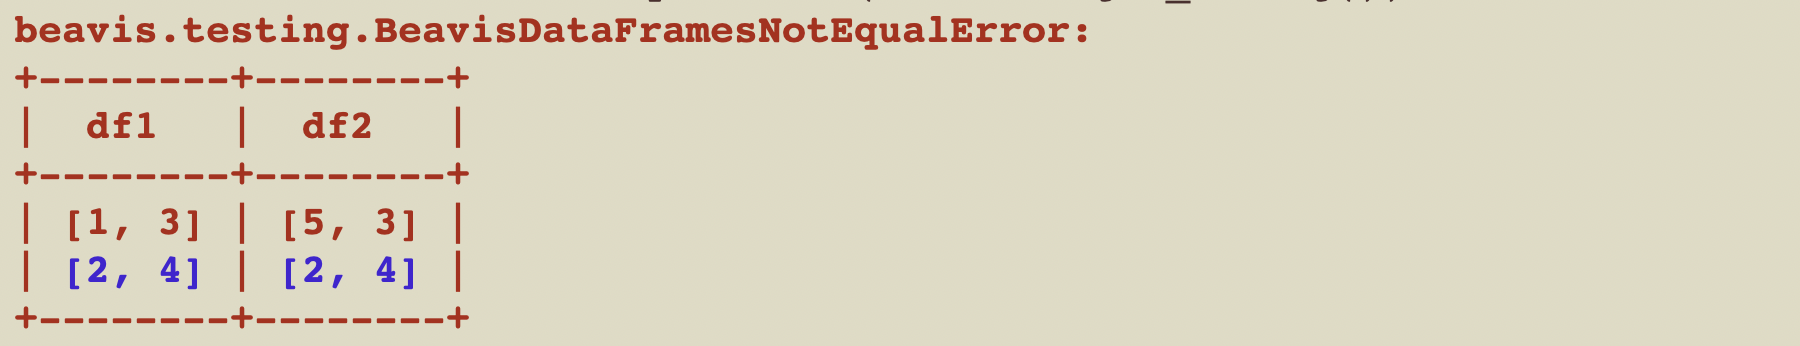 dd_not_equal